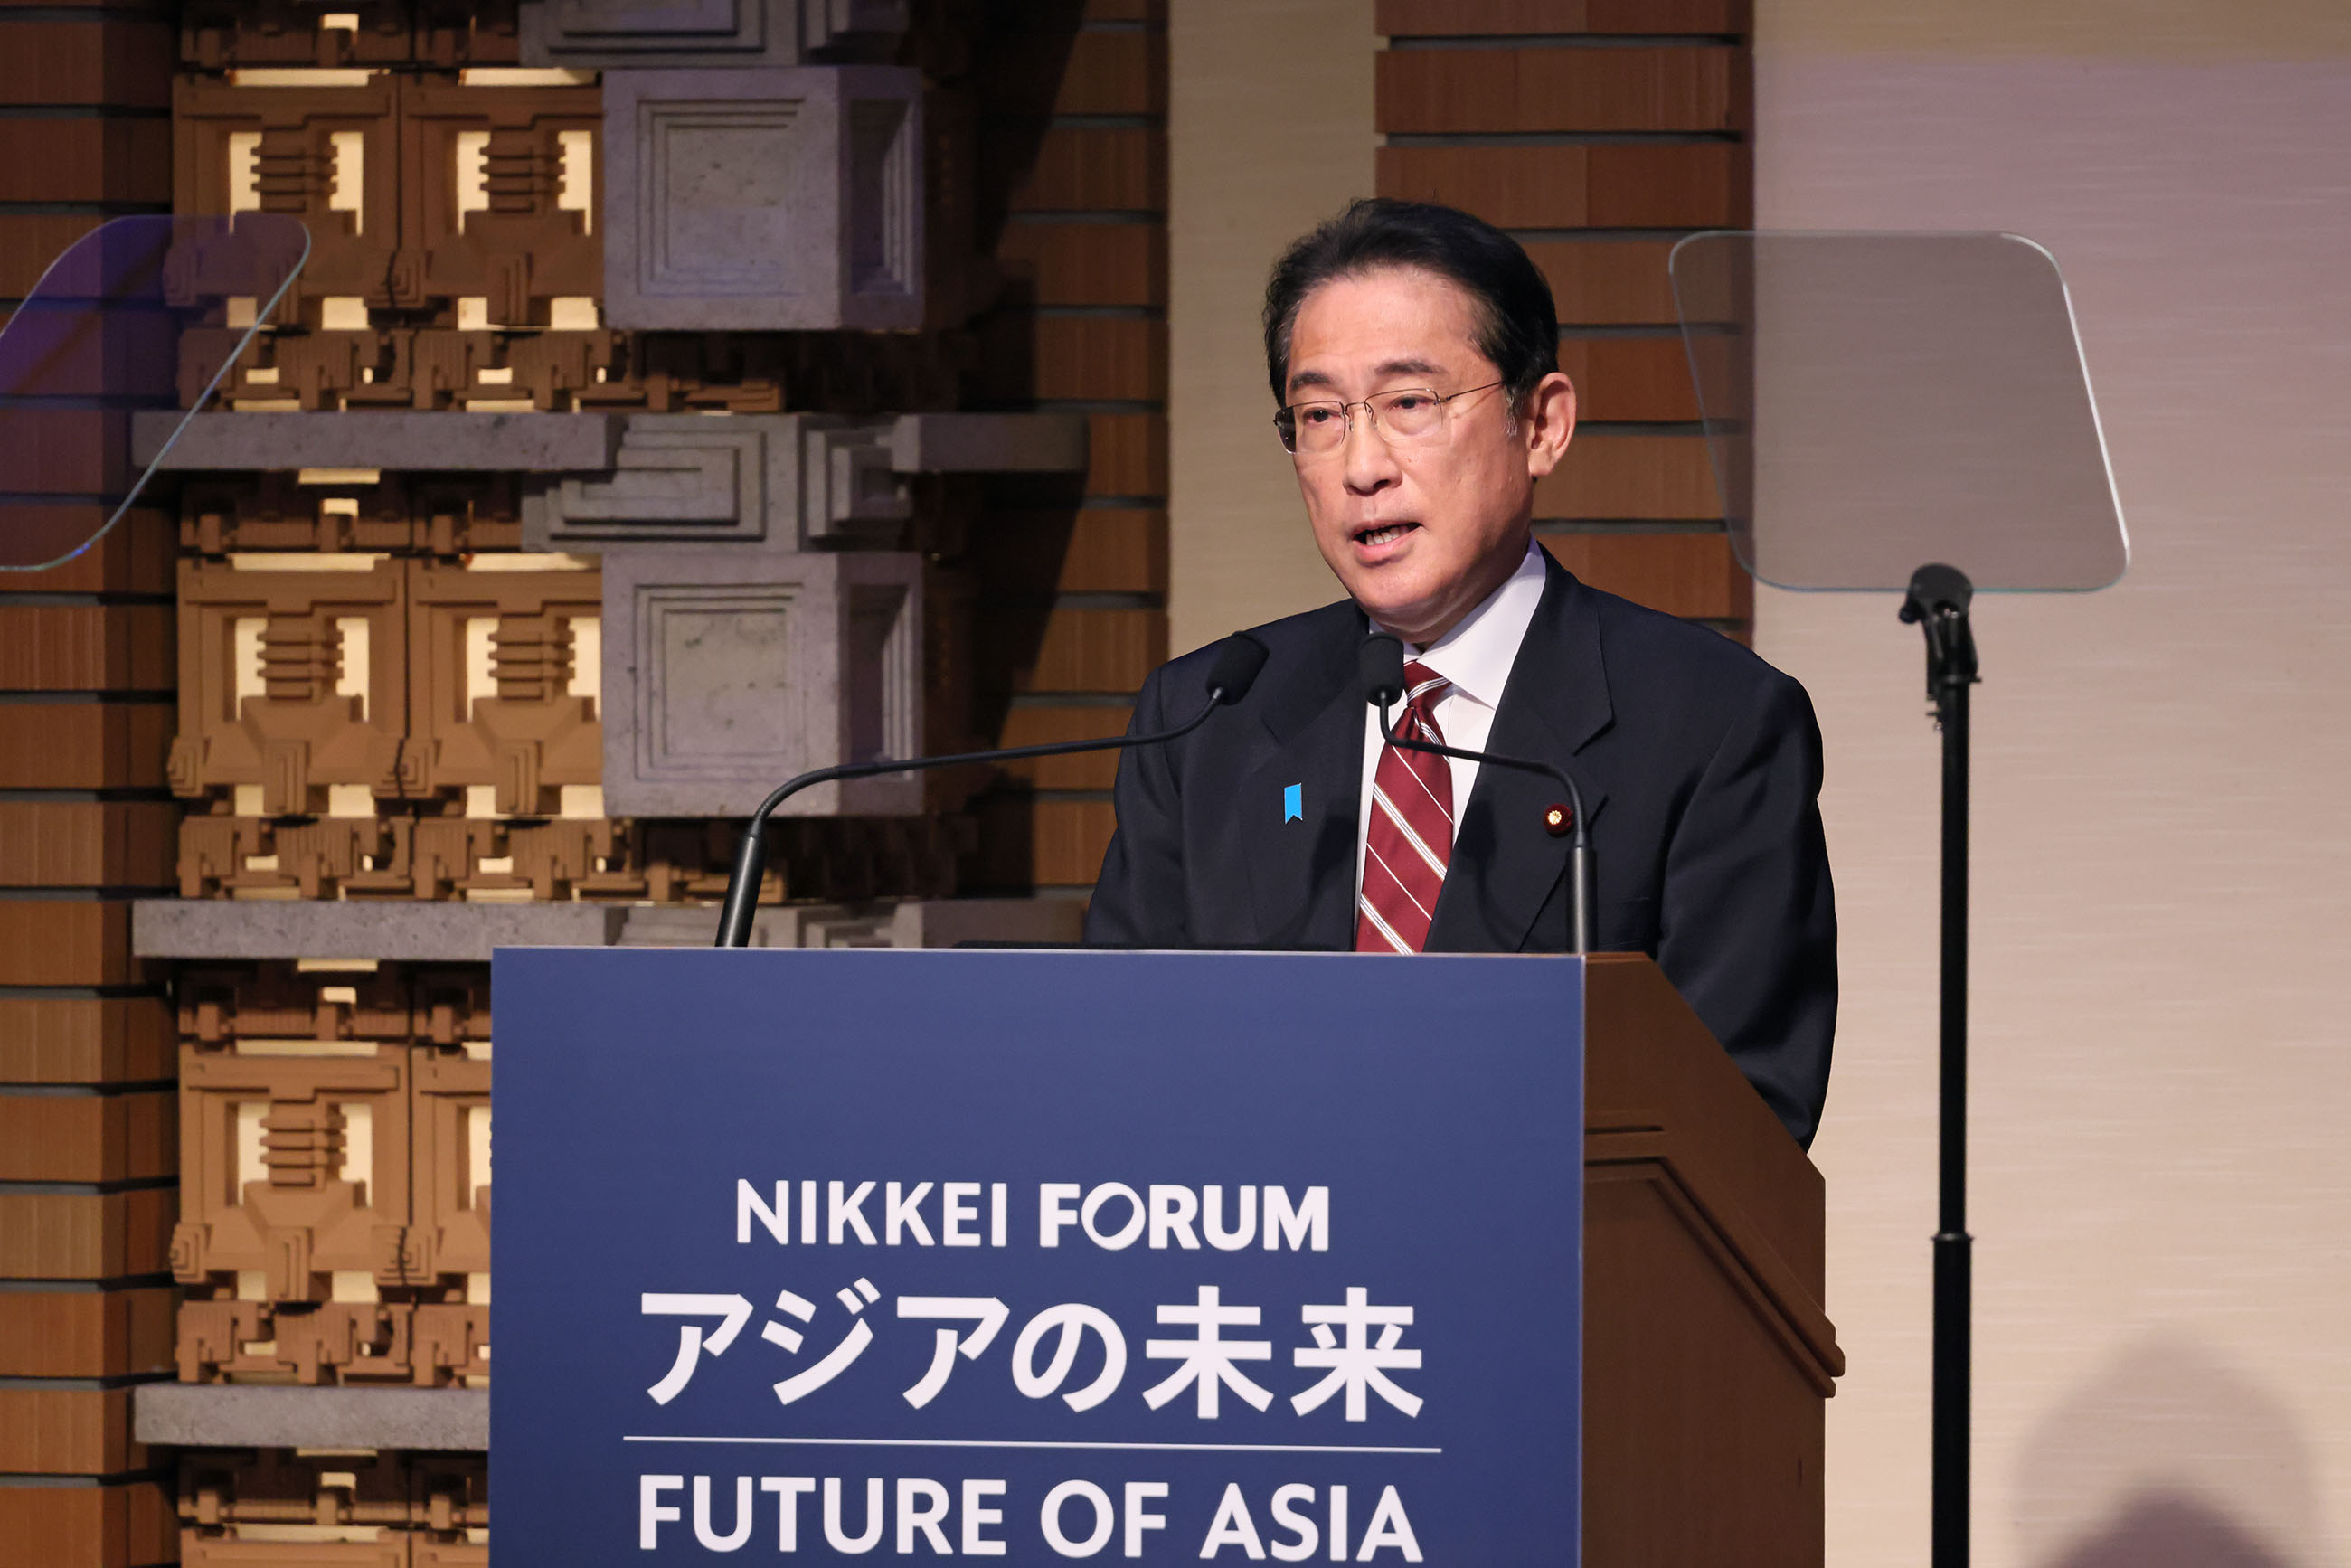 Nikkei Forum 28th Future of Asia Dinner